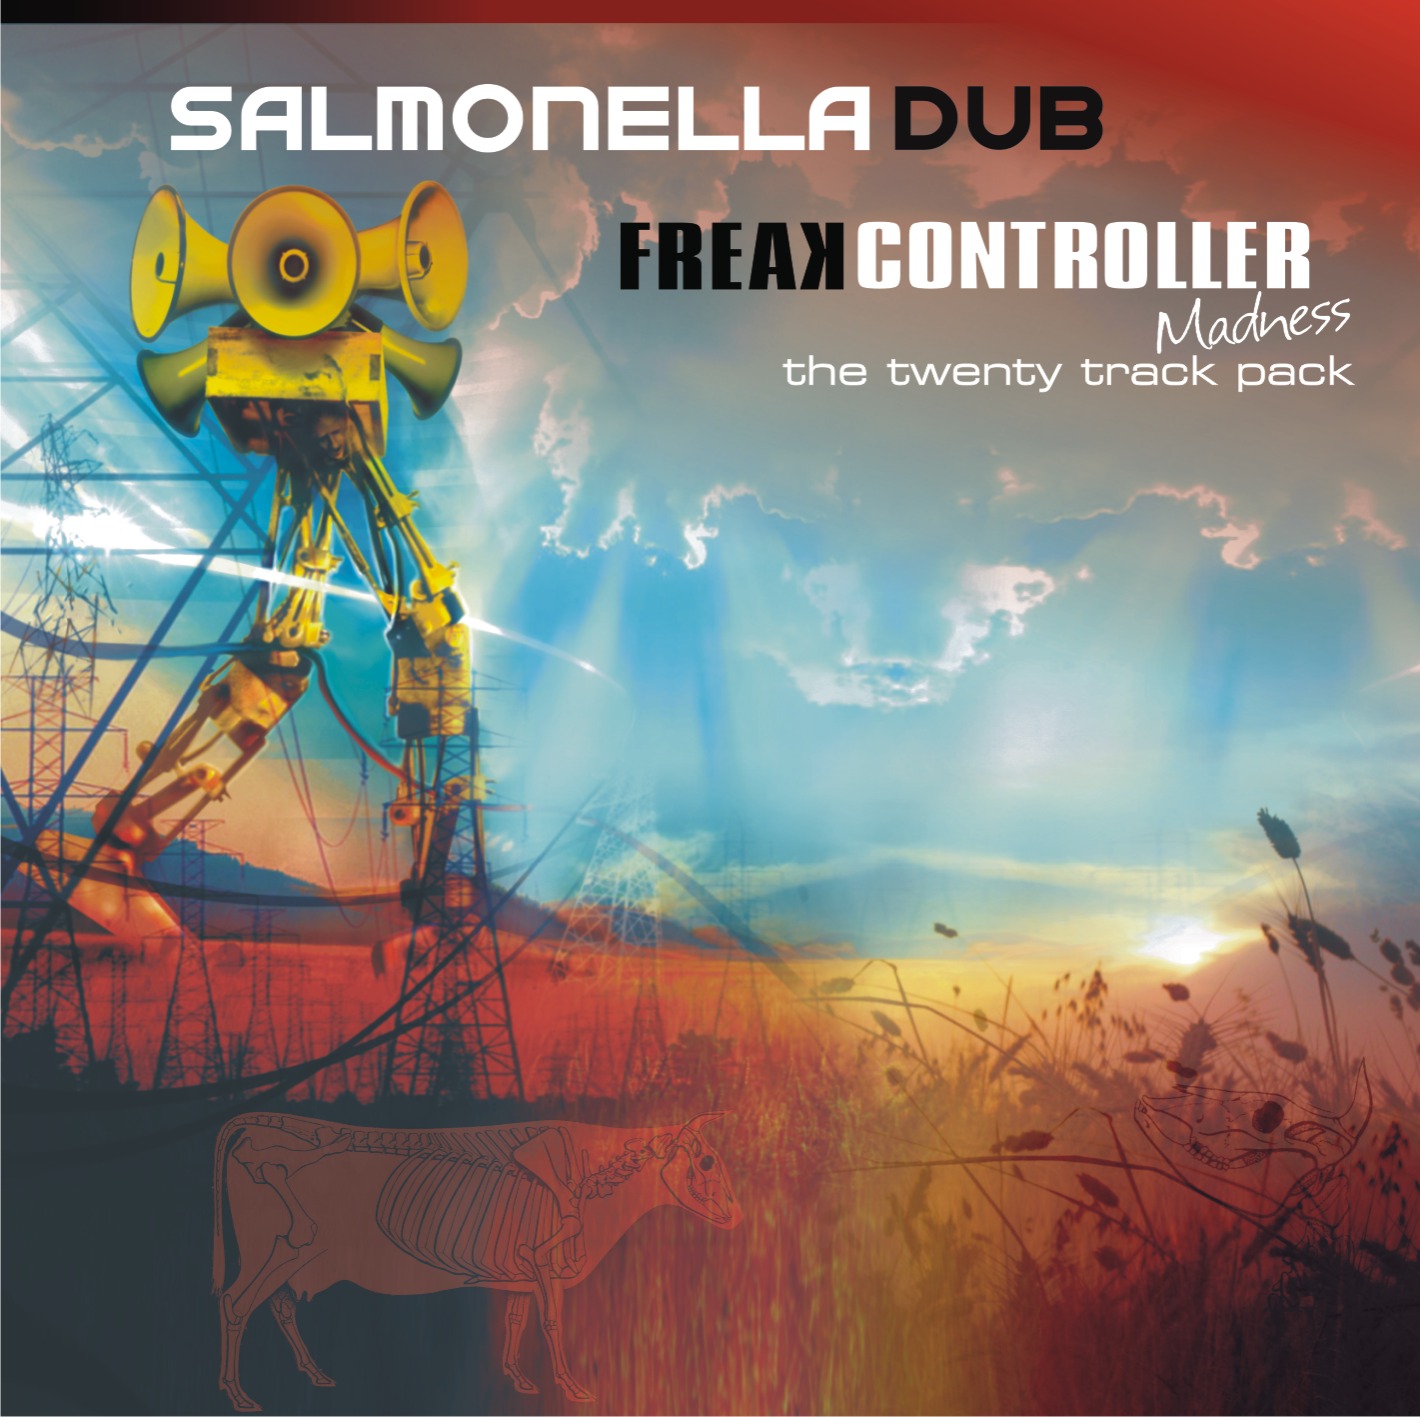 Freak Controller MADNESS the twenty track pack >>> fresh Salmonella Dub